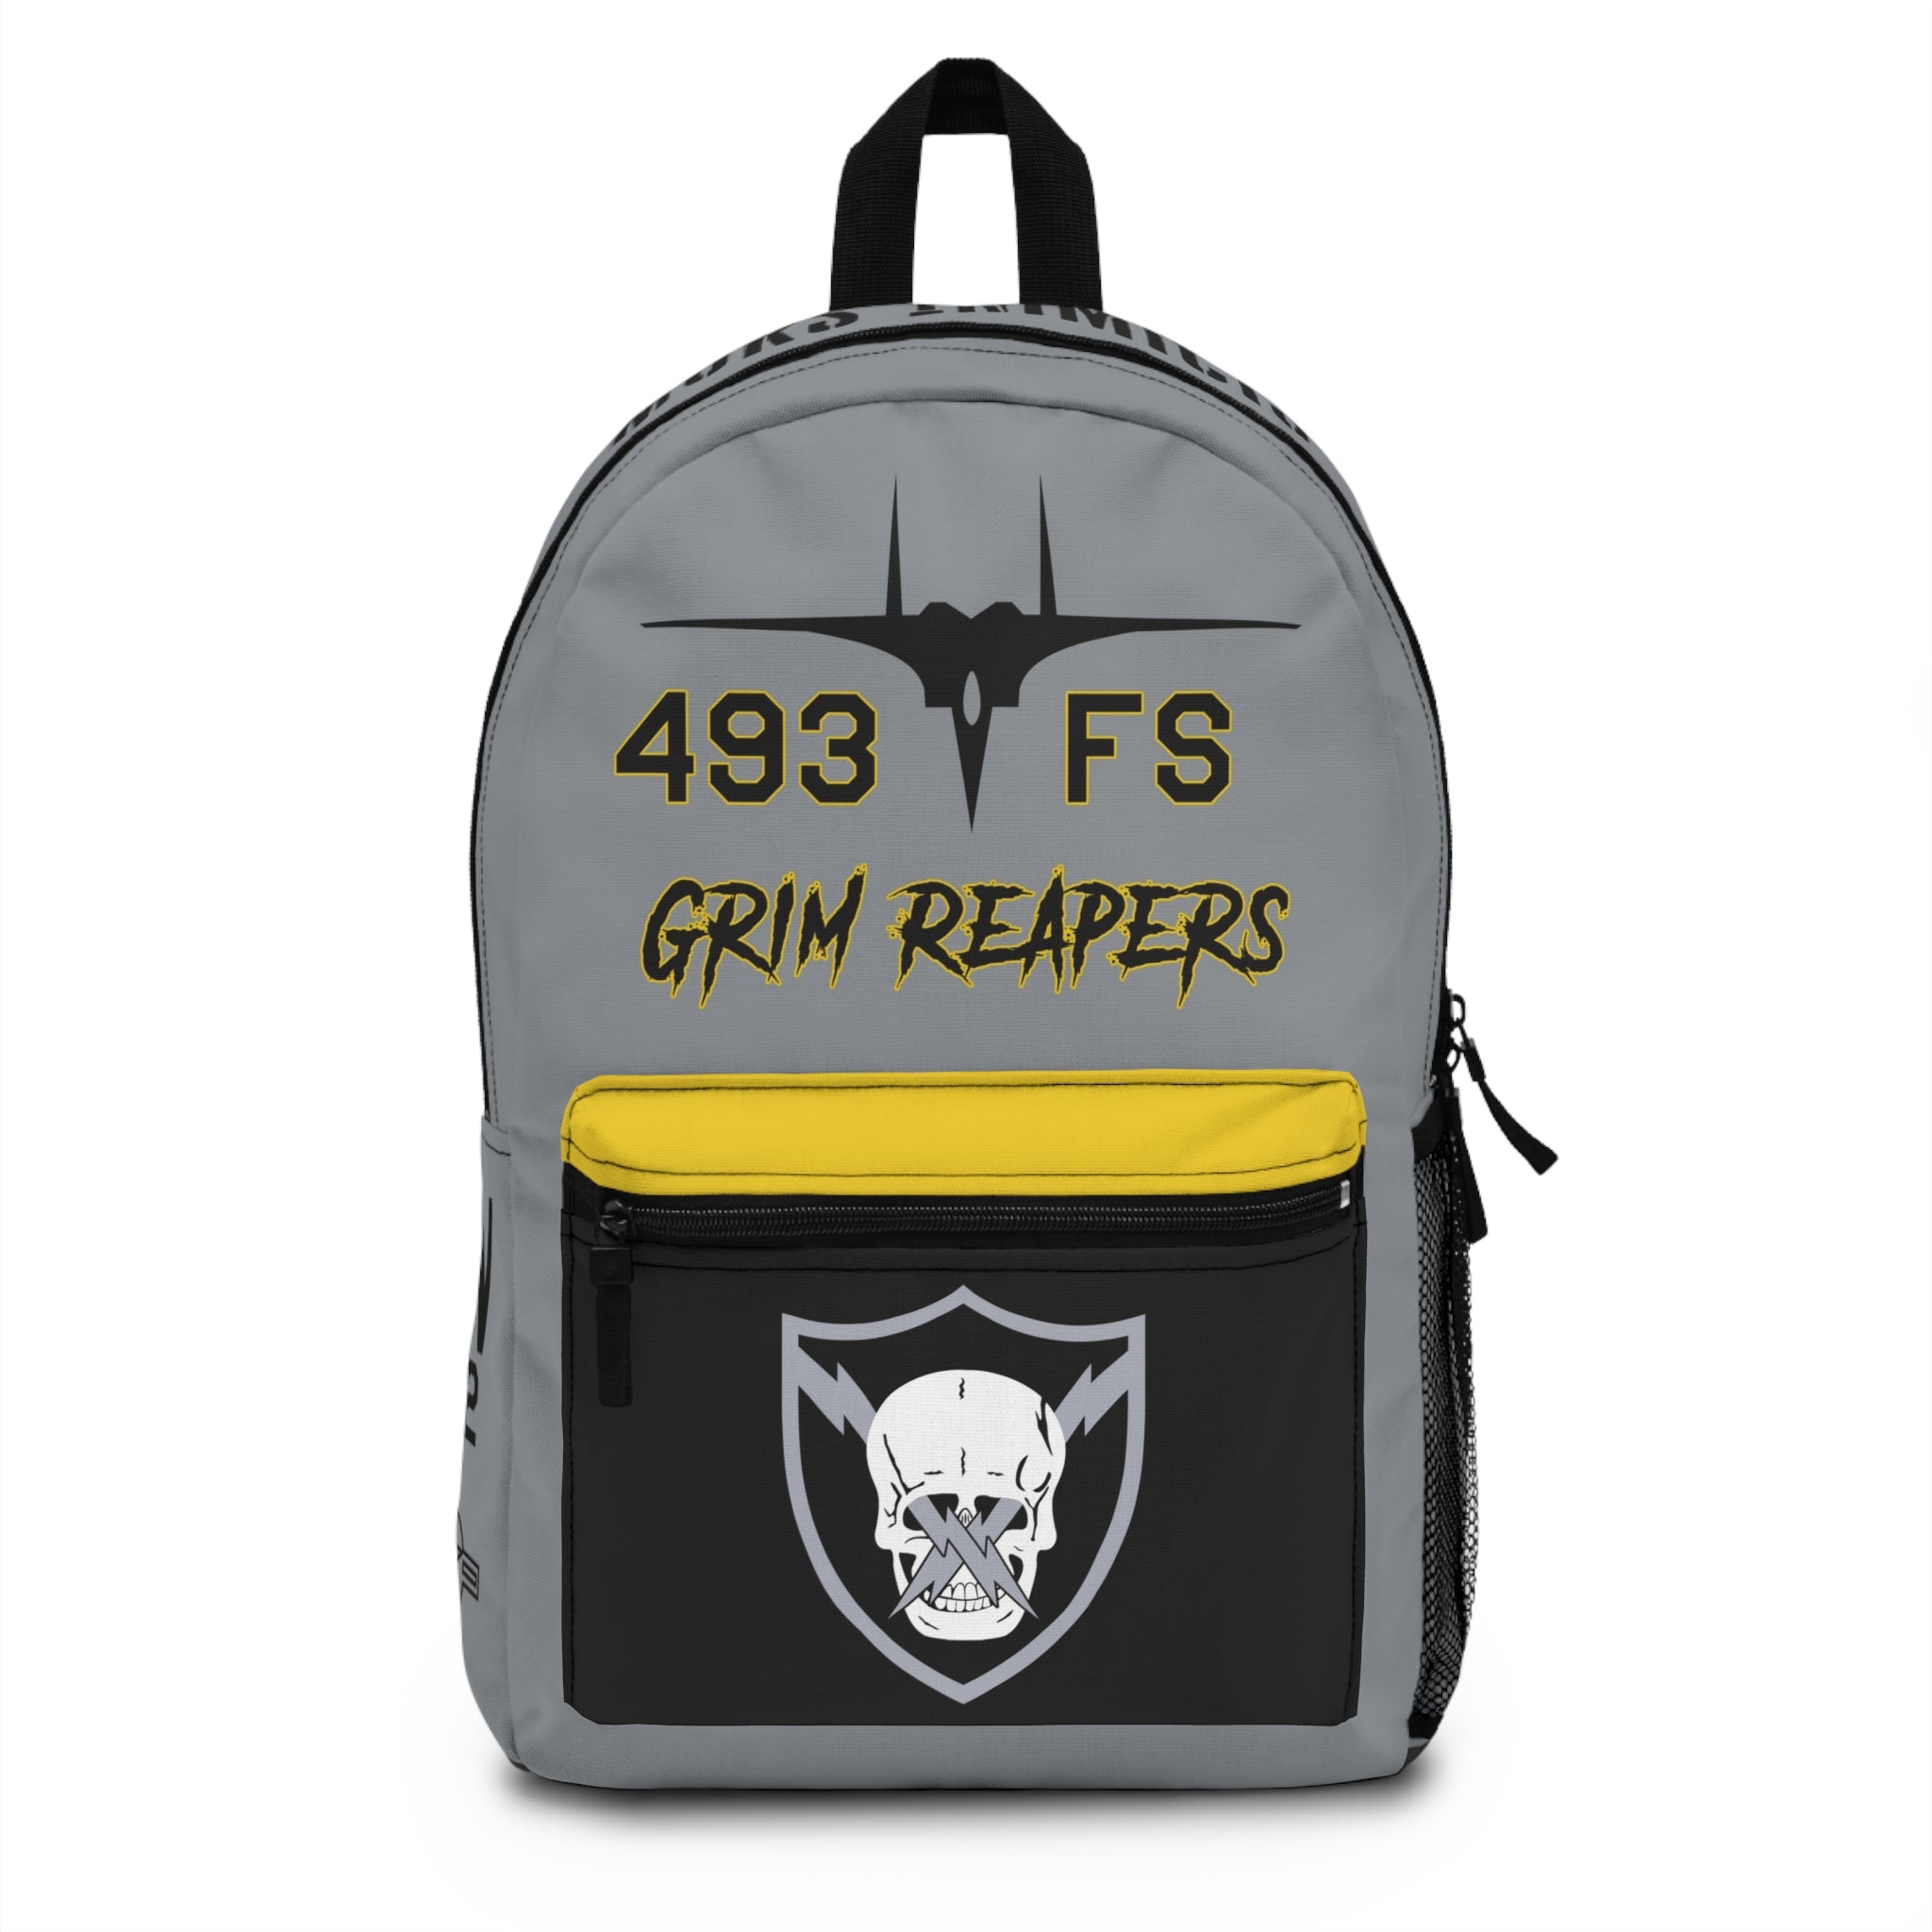 F-15  "Grim Reapers" Backpack - I Love a Hangar